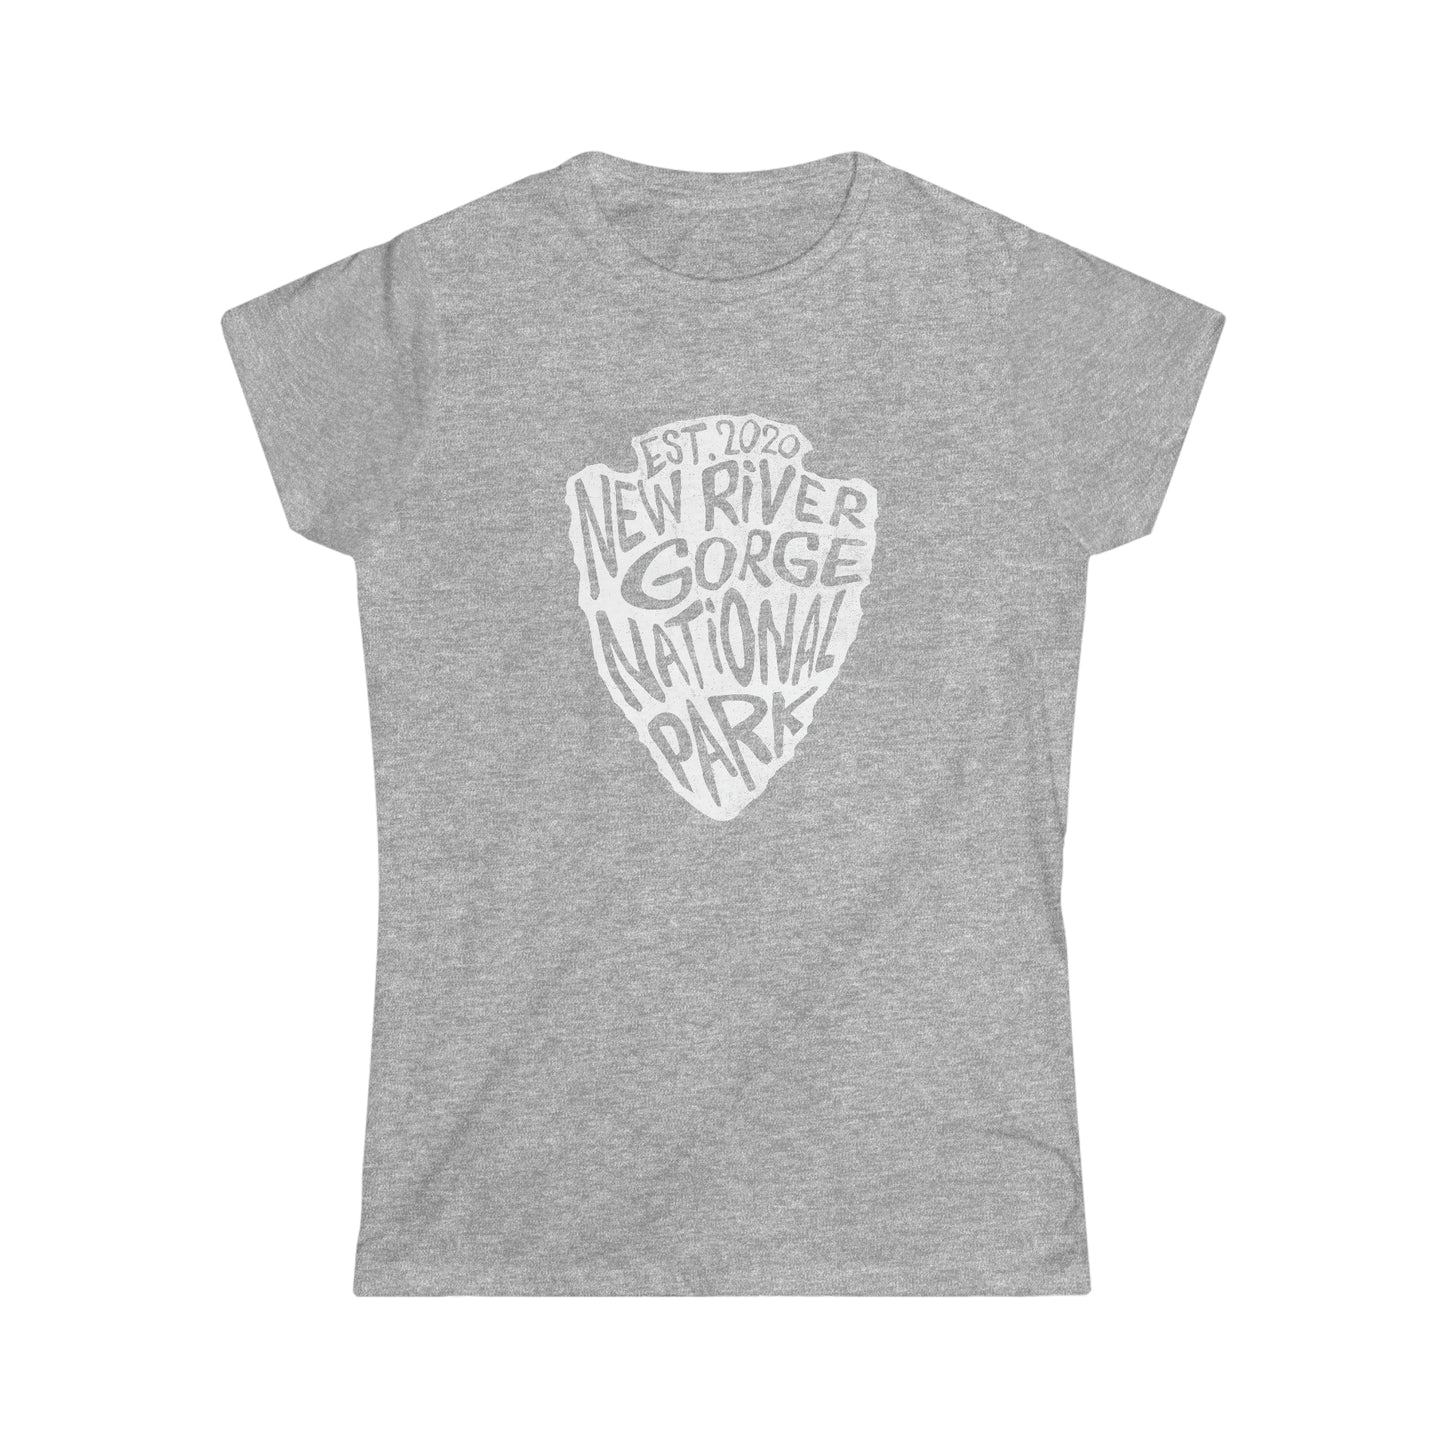 New River Gorge National Park Women's T-Shirt - Arrowhead Design